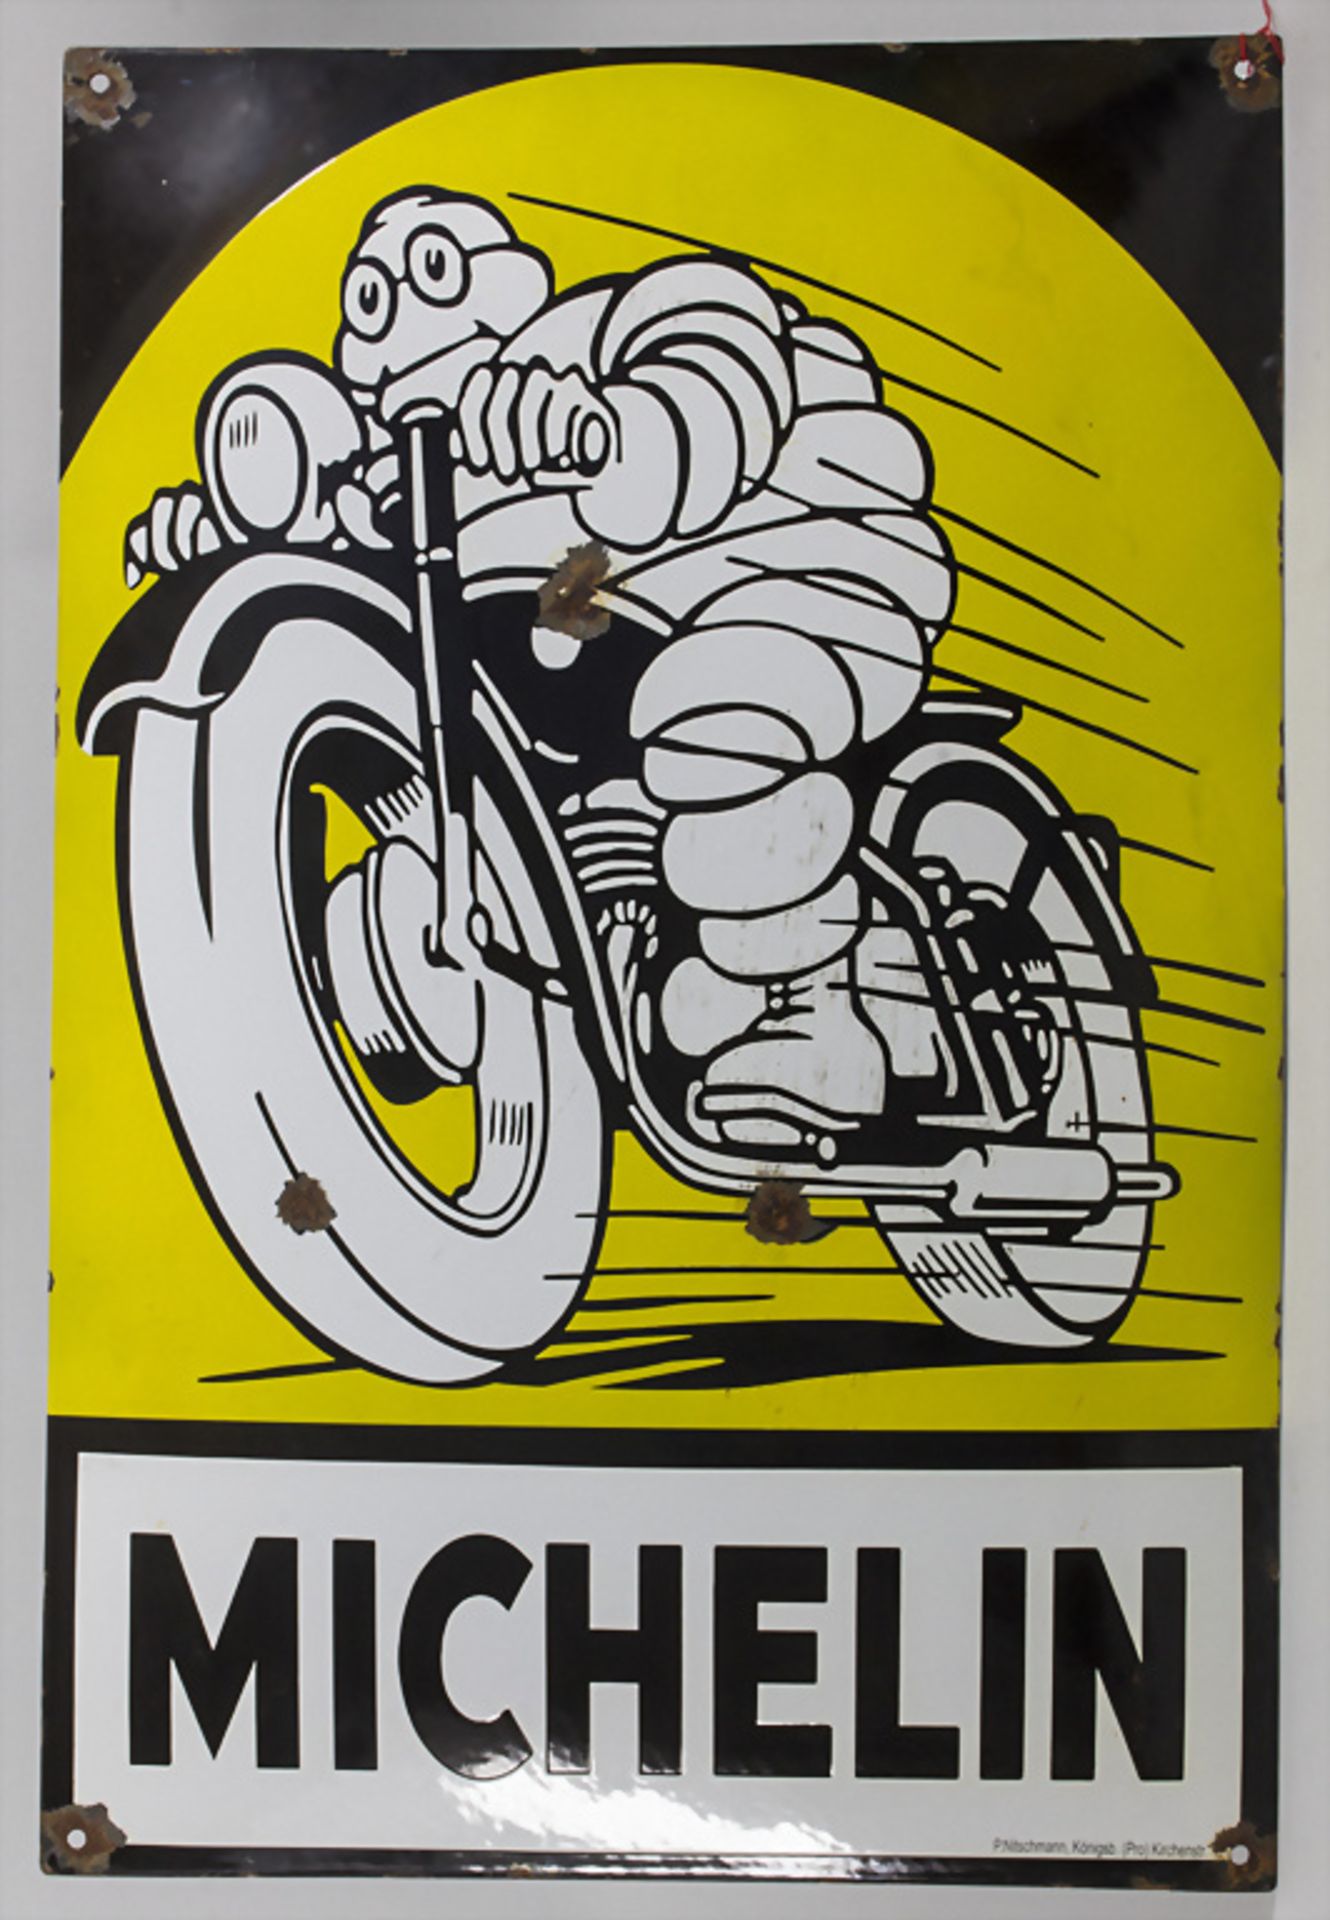 Email-Werbeschild 'Michelin' / An enamelled advertising sign 'Michelin',